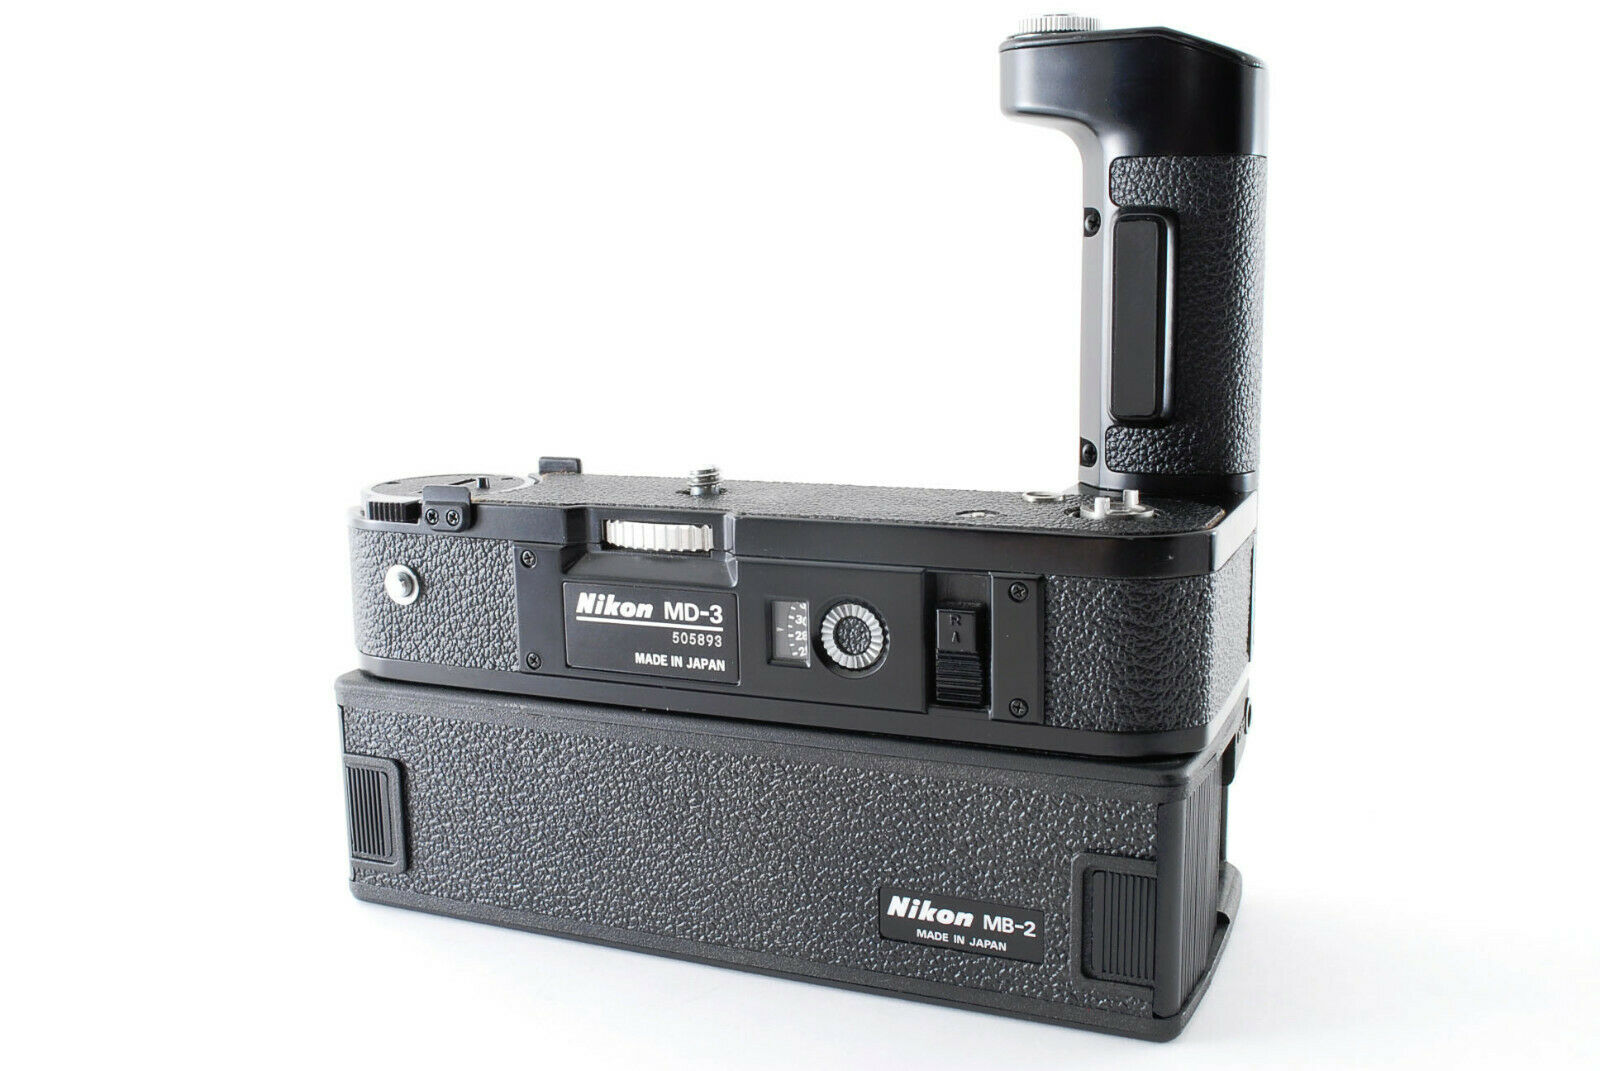 [nearmint] Nikon Md-3 Motor Drive & Mb-2 Battery Pack From Japan